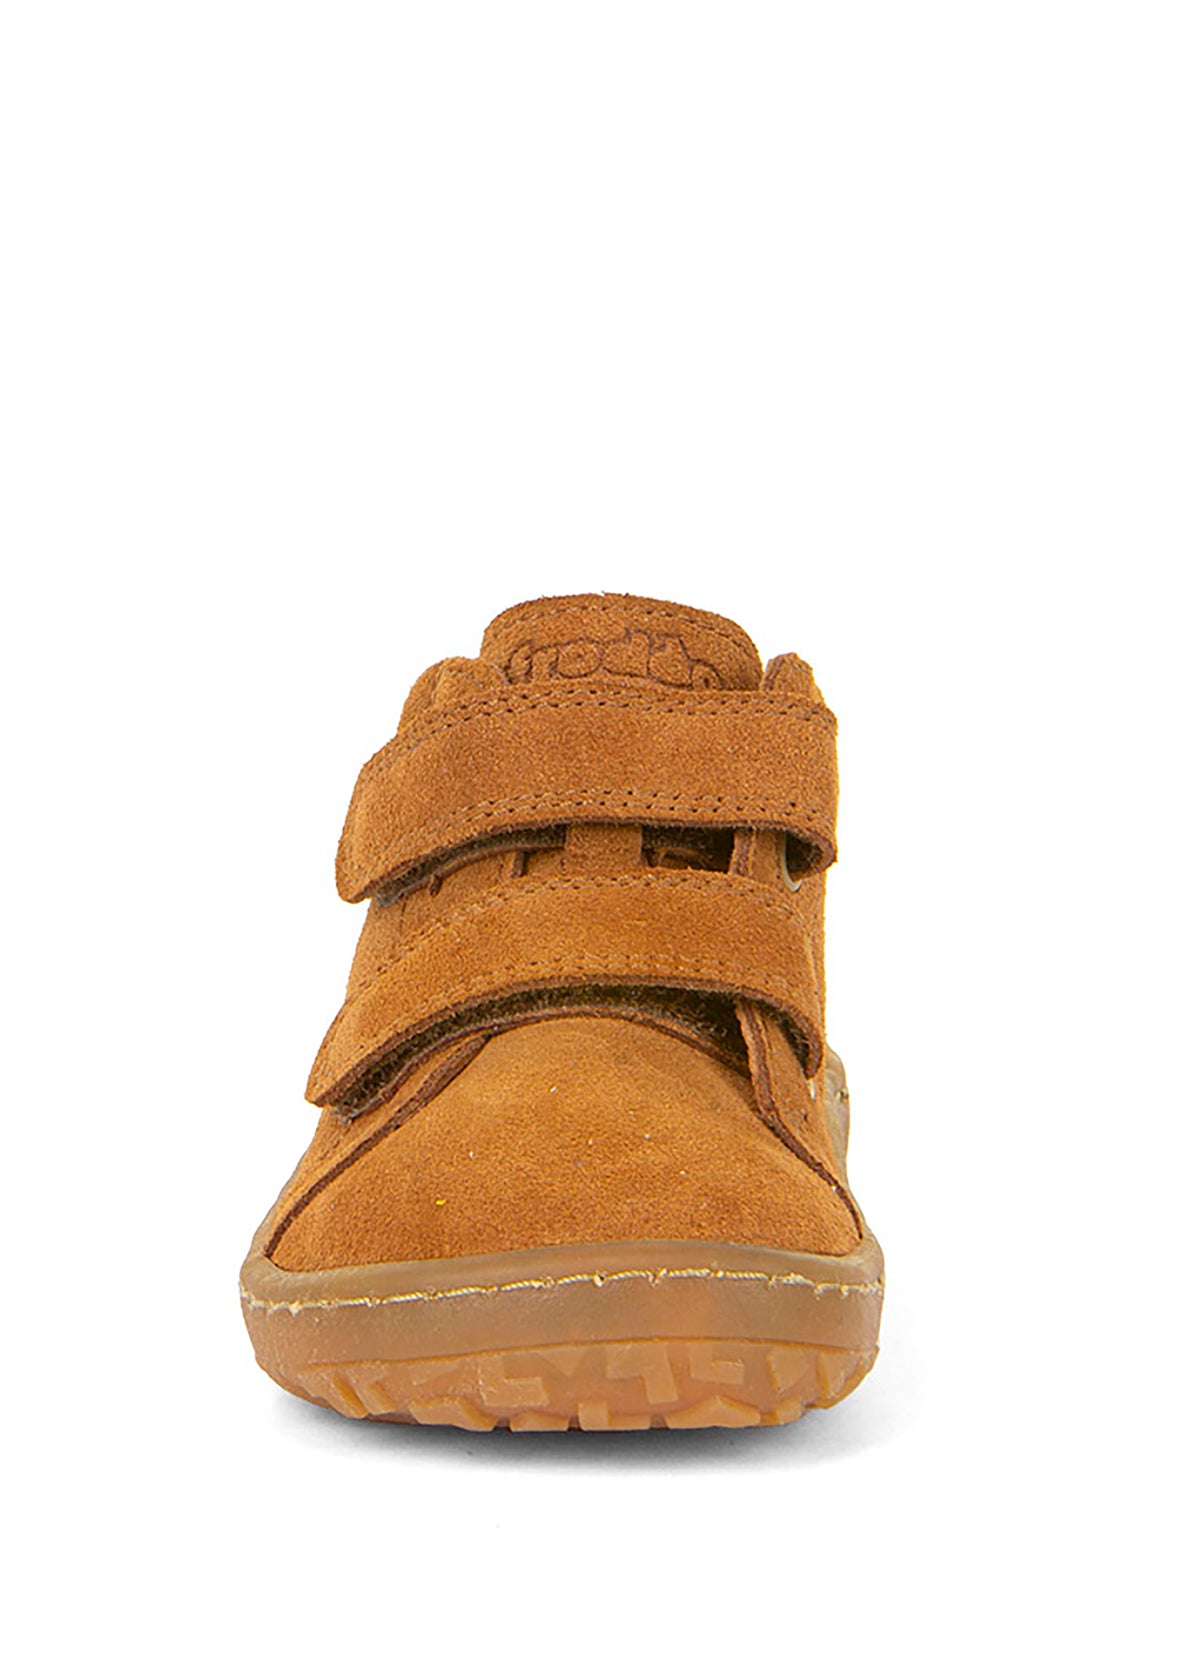 Barfotaskor för barn - konjaksbrun mocka, Barefoot First Step